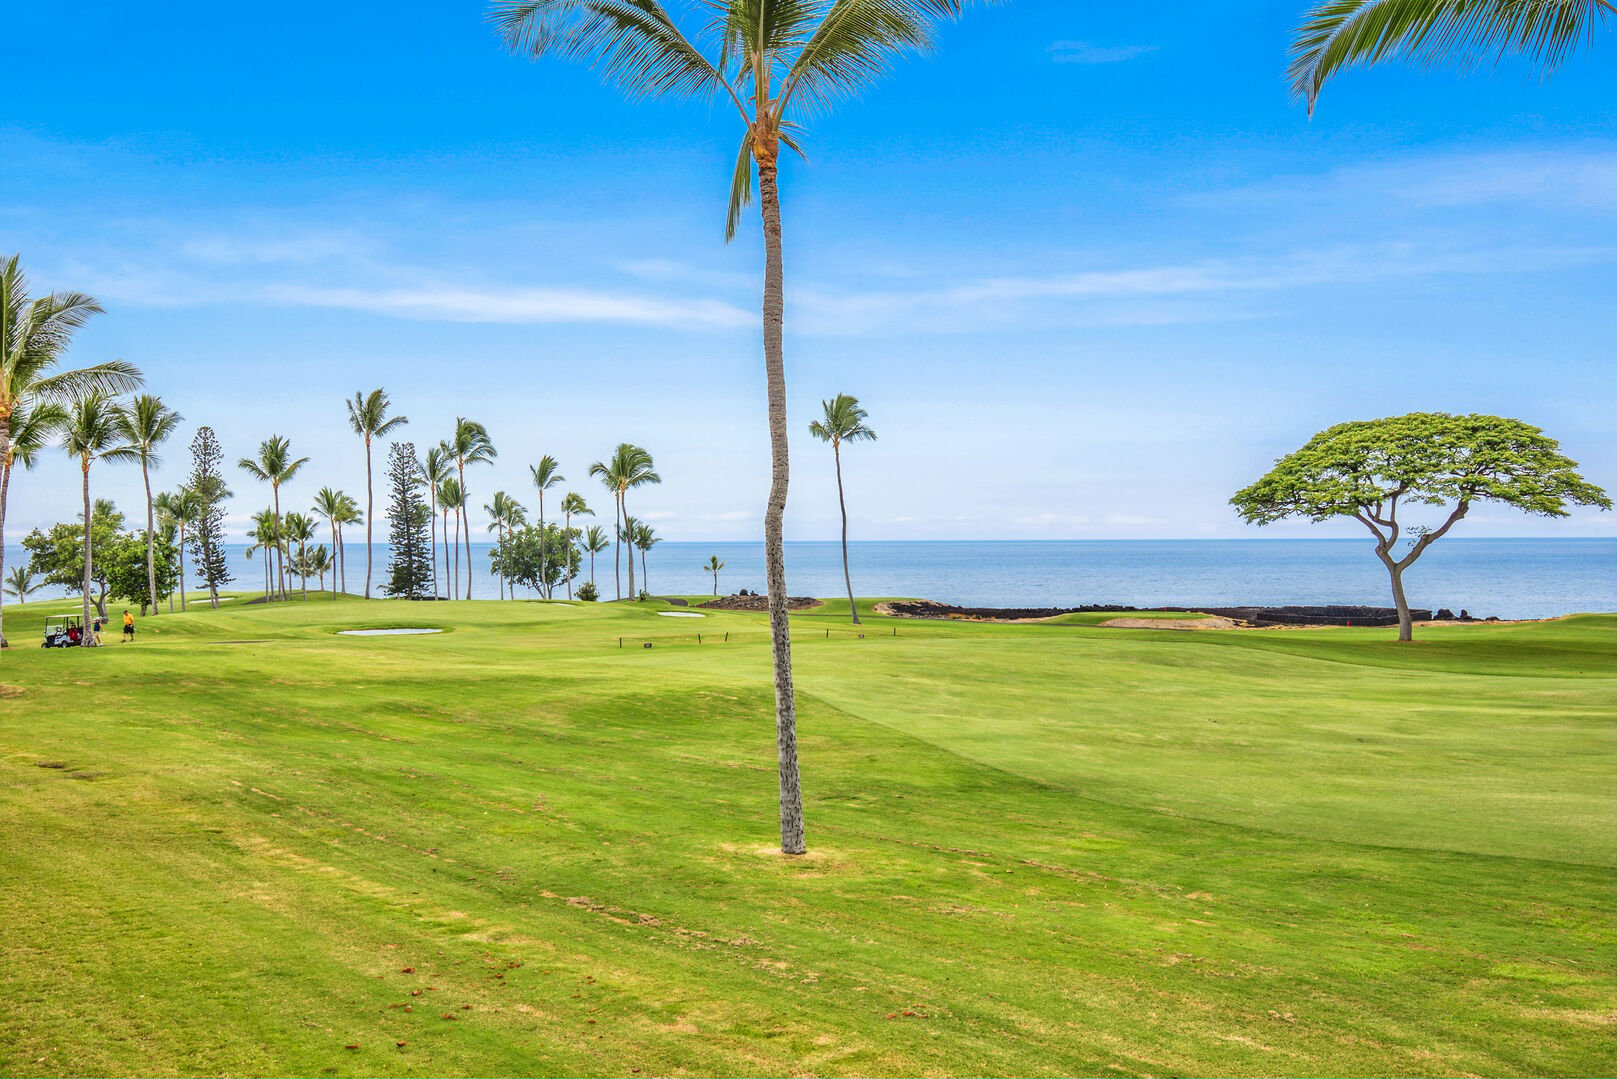 Enjoy an ocean view across the golf course